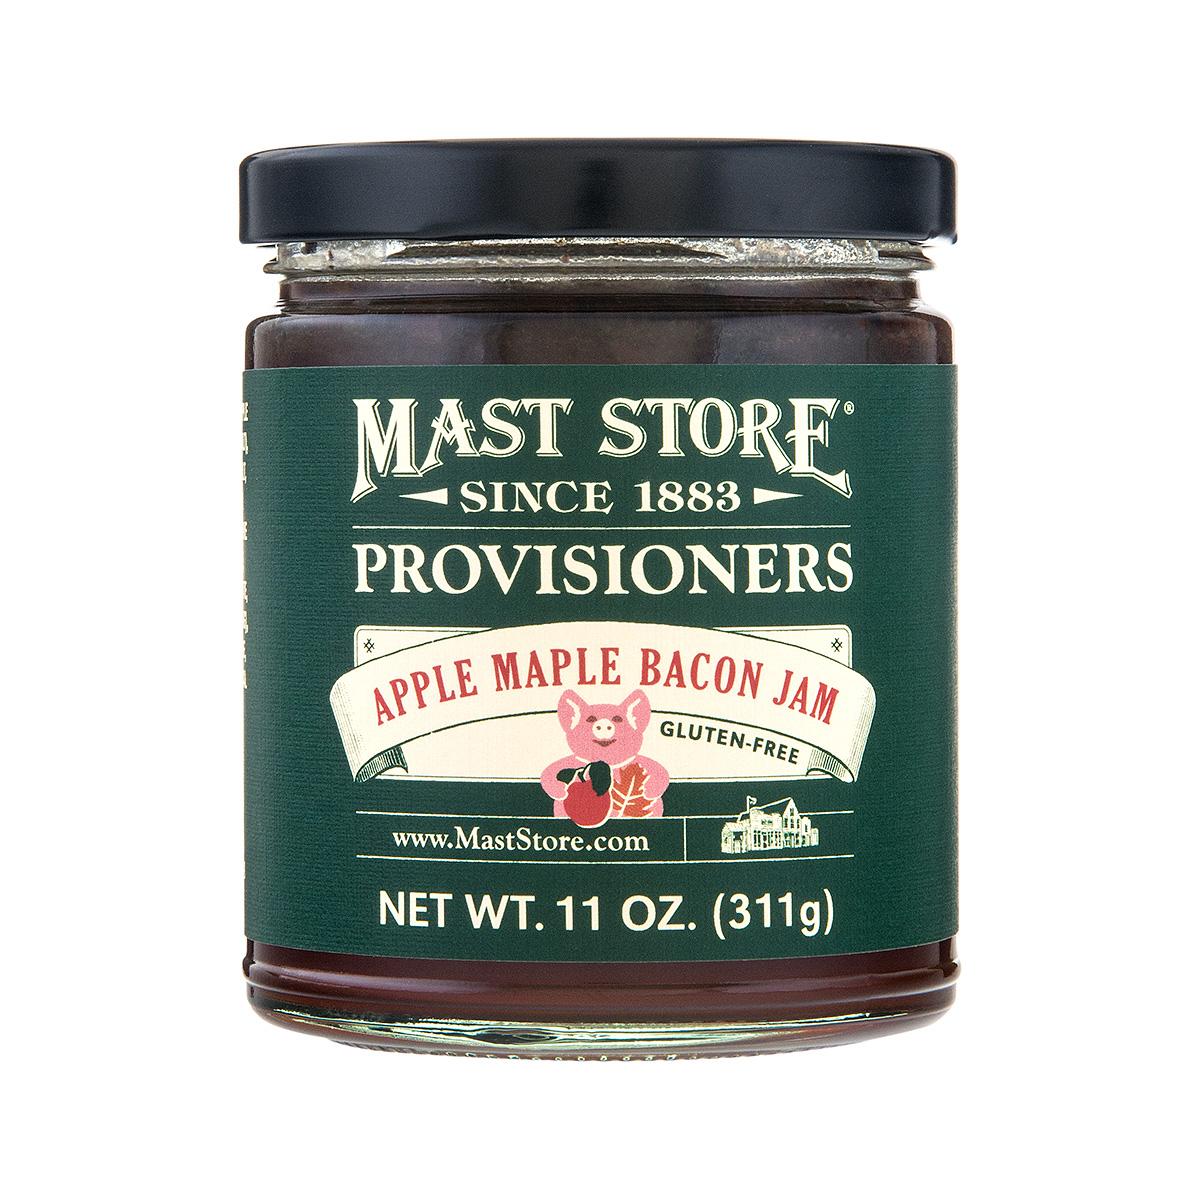  Mast Store Provisioners Apple Maple Bacon Jam